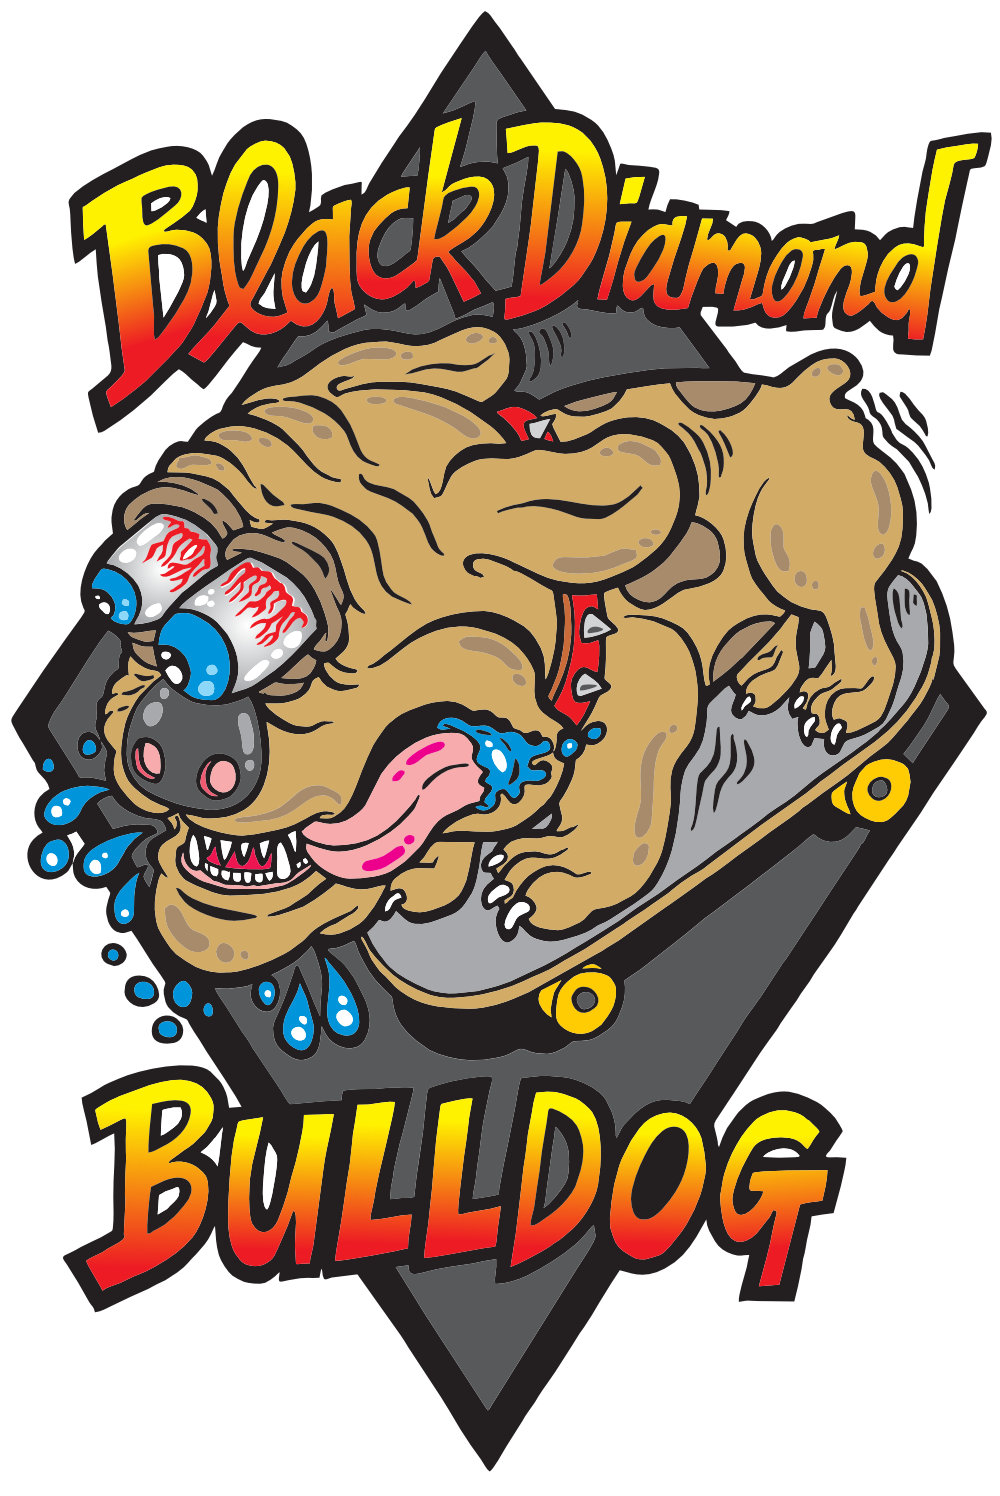 Black Diamond Bulldog - 1200mm